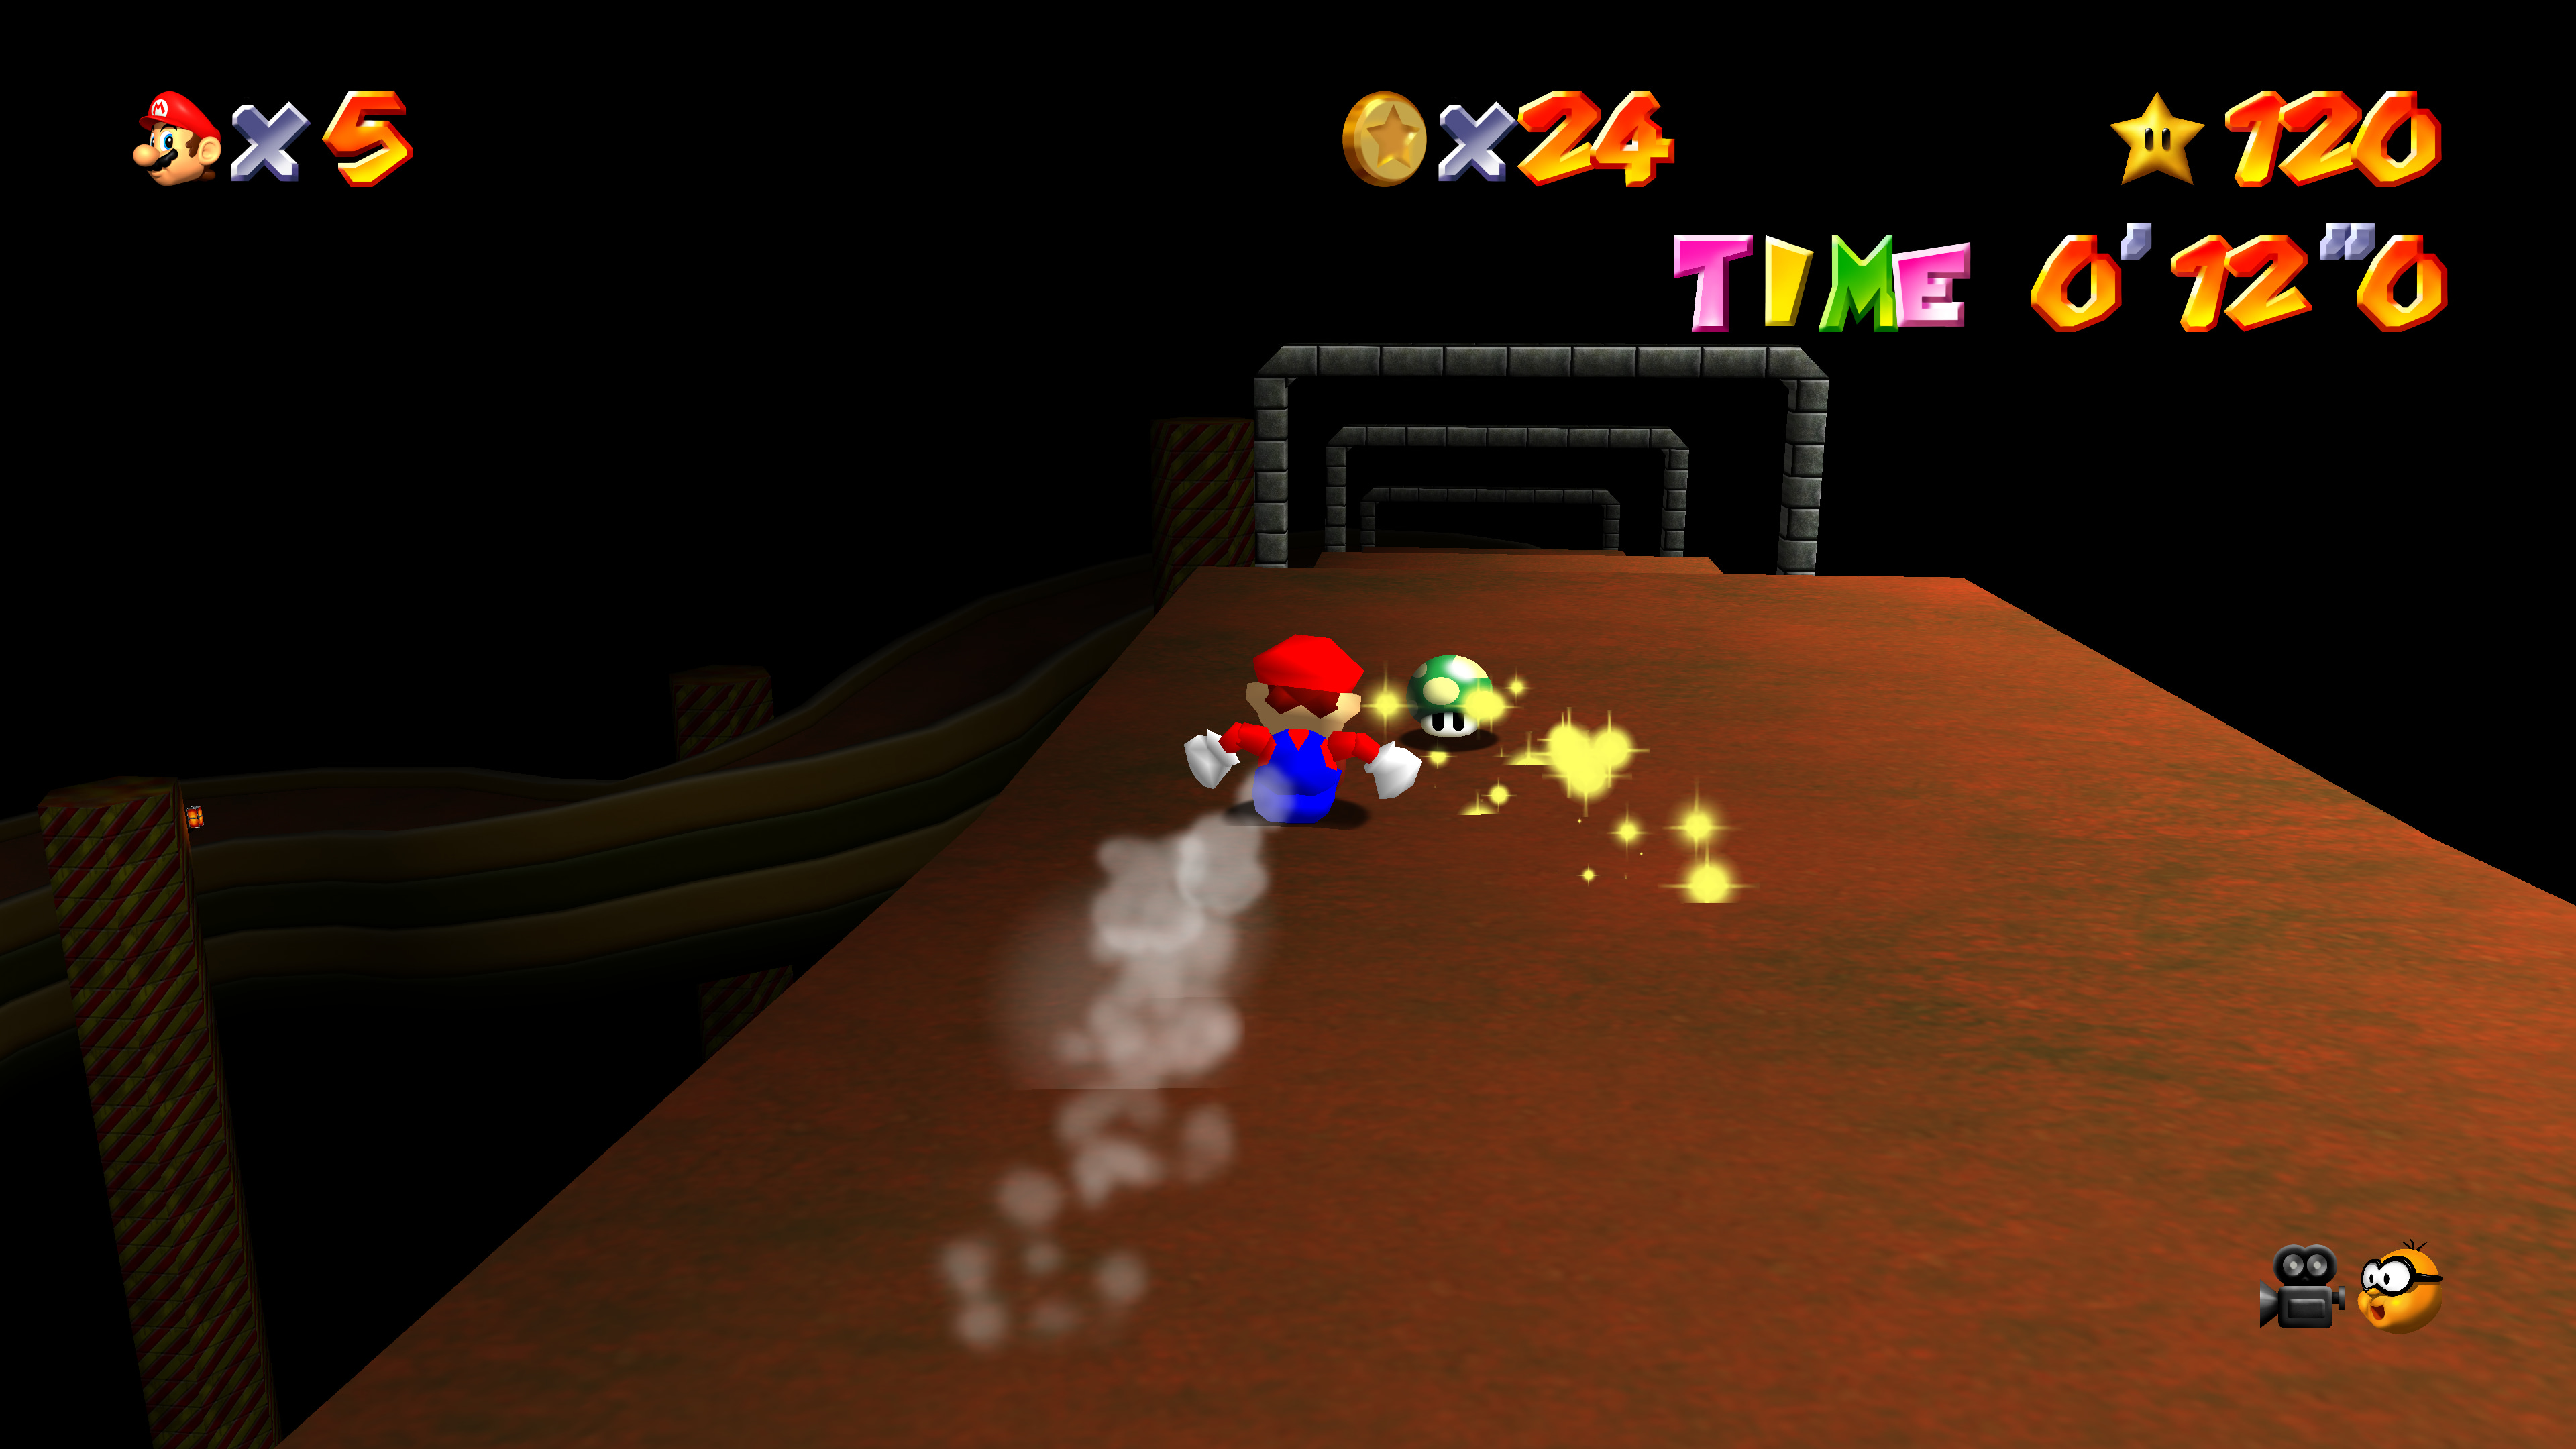 Super Mario 64 - Shindou Edition ROM - N64 Download - Emulator Games